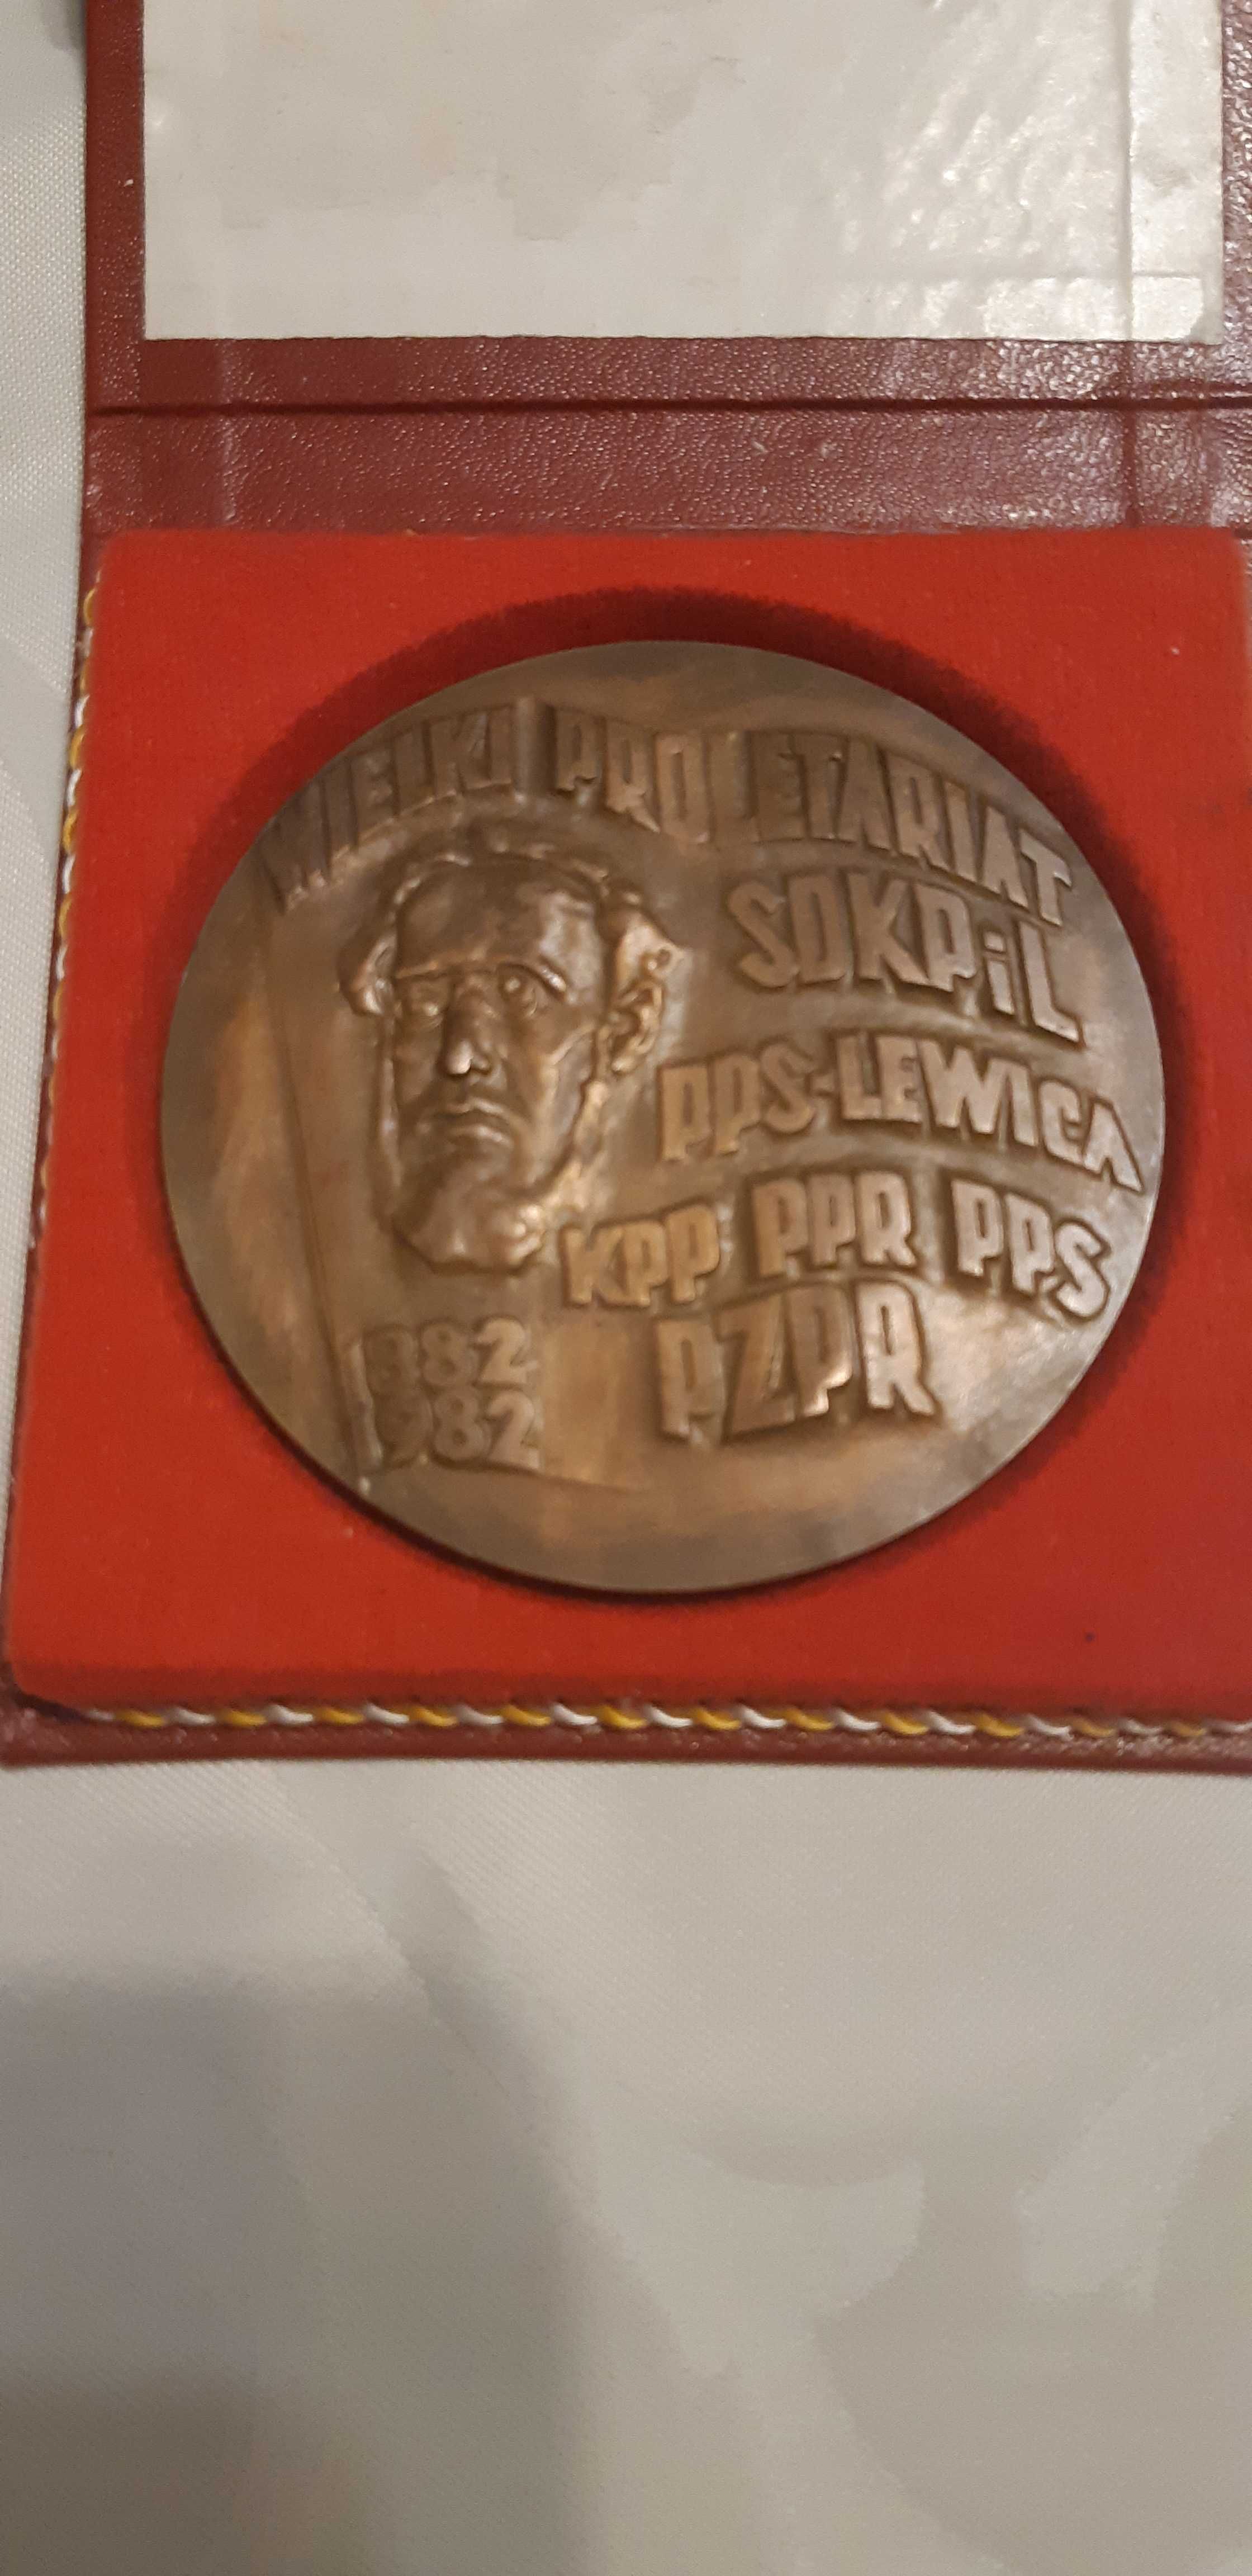 medal 100 lat Ruchu Robotnicze w Polsce - średnica 8 cm